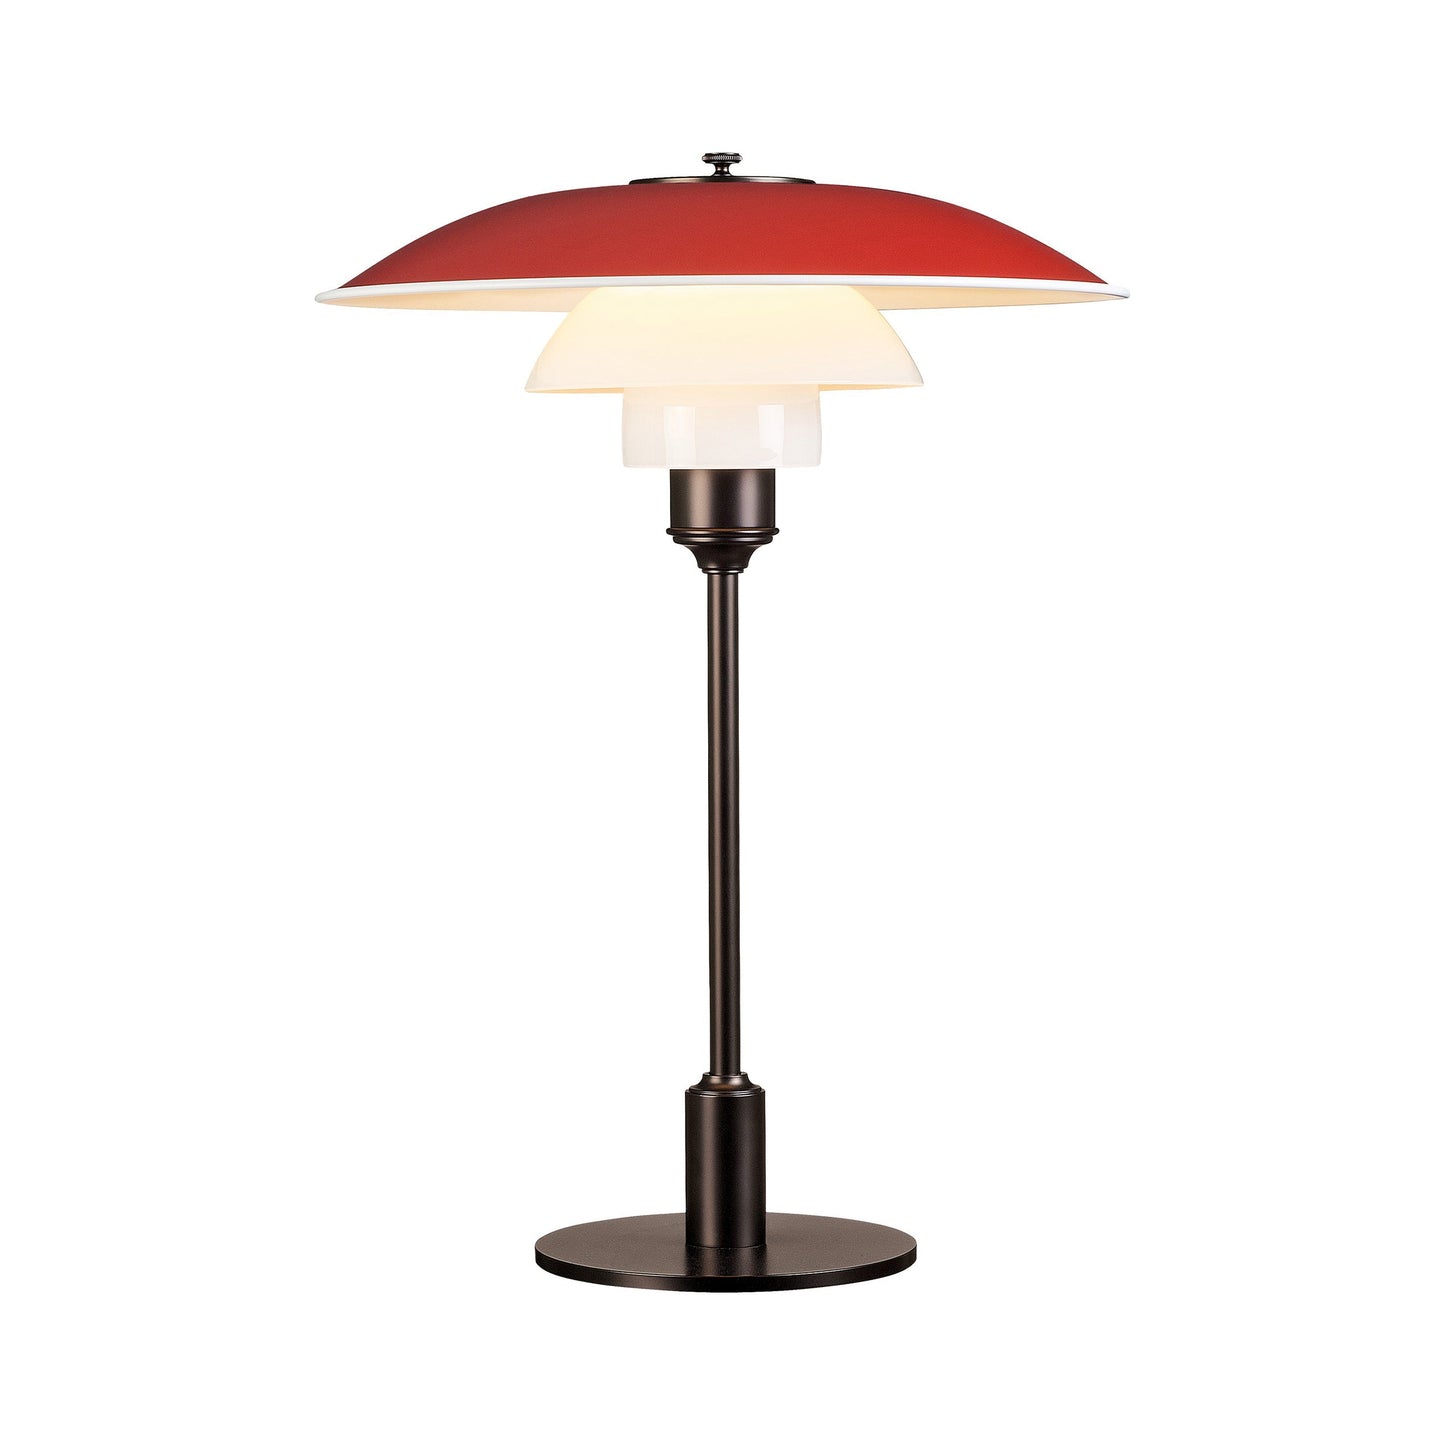 PH 3-2 Table Lamp